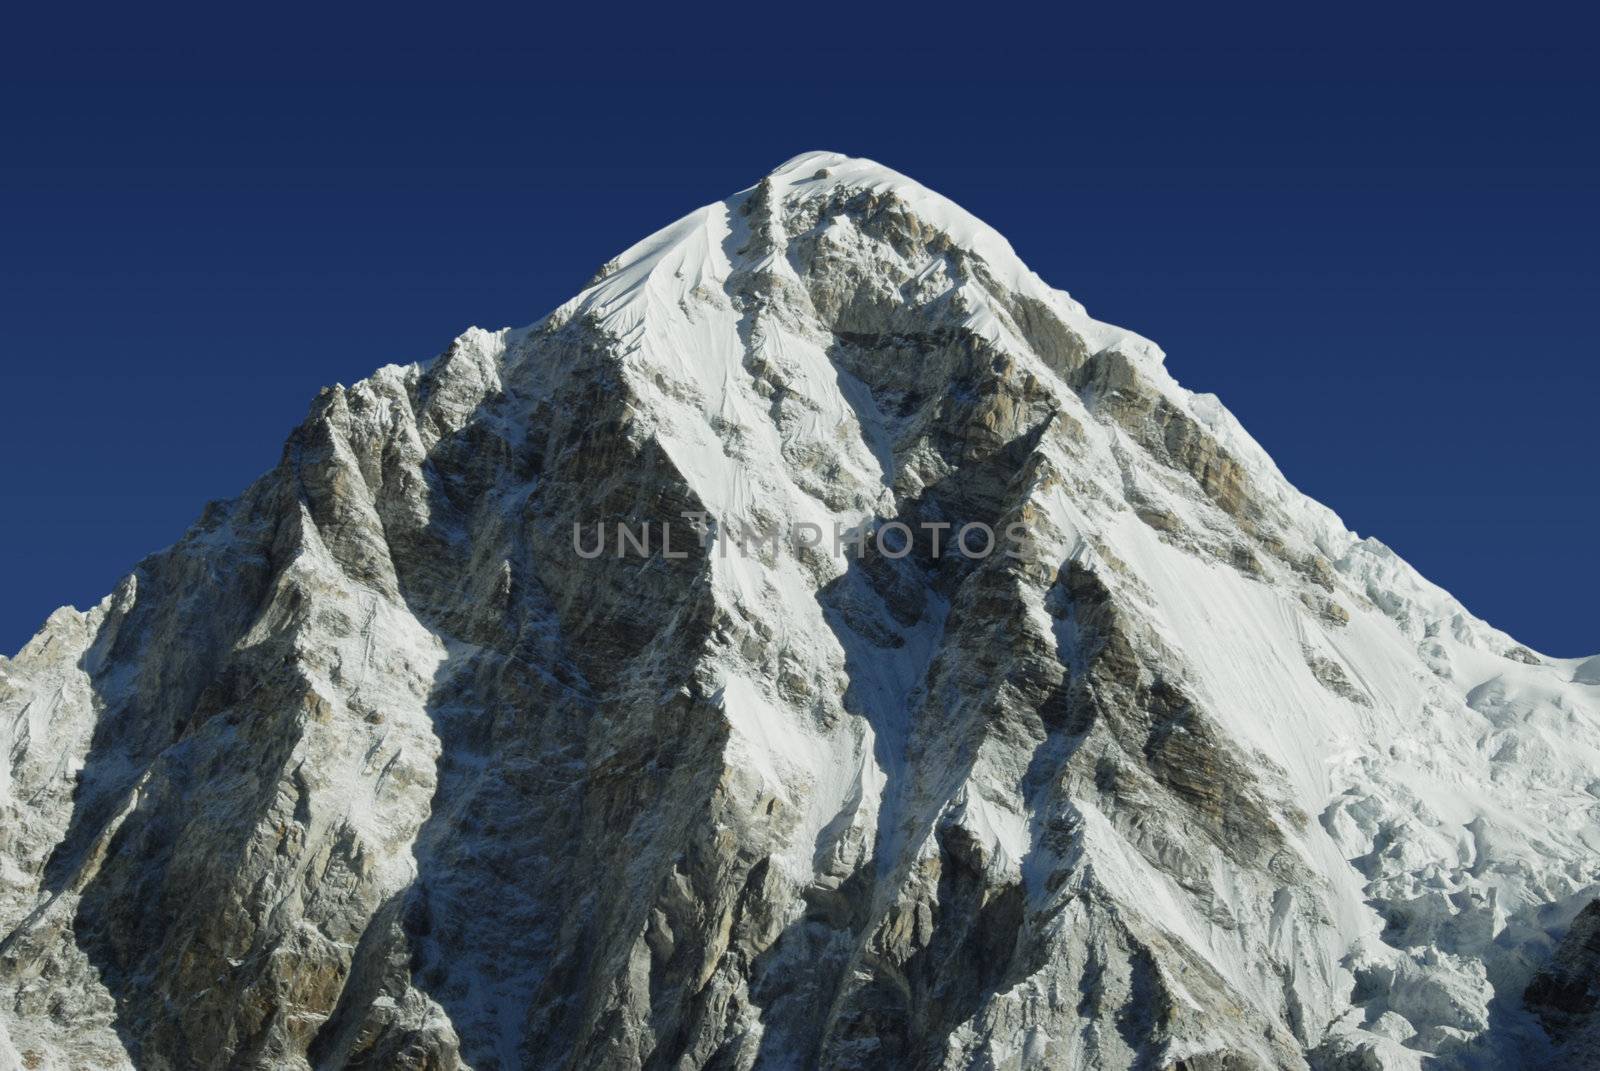 Himalayan mountain Pumori in the Everest mountain range under a bright blue sky